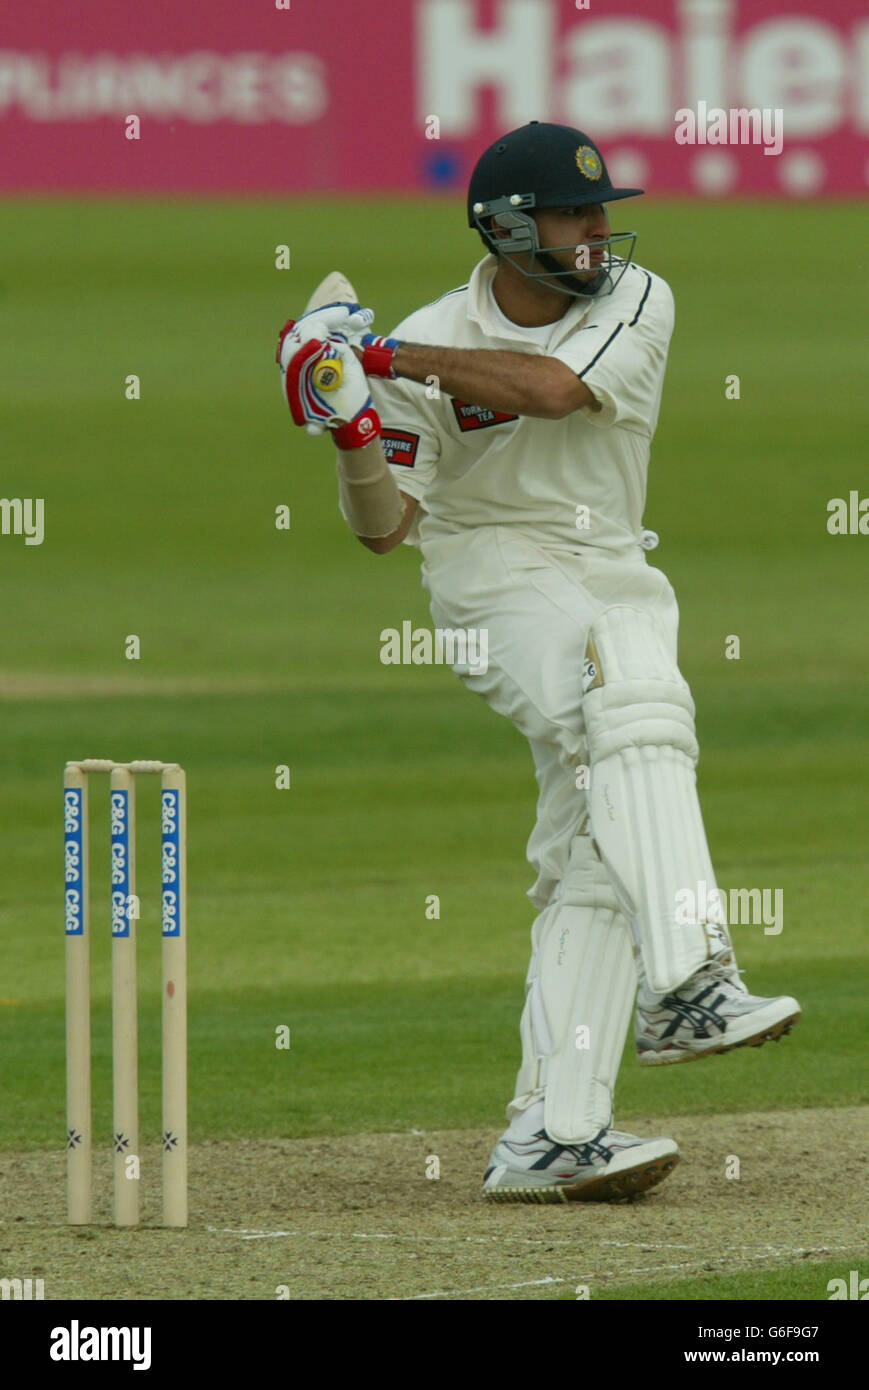 Yuvraj Singh bats for Yorkshire. PA Photo : DAVID DAVIES. Stock Photo